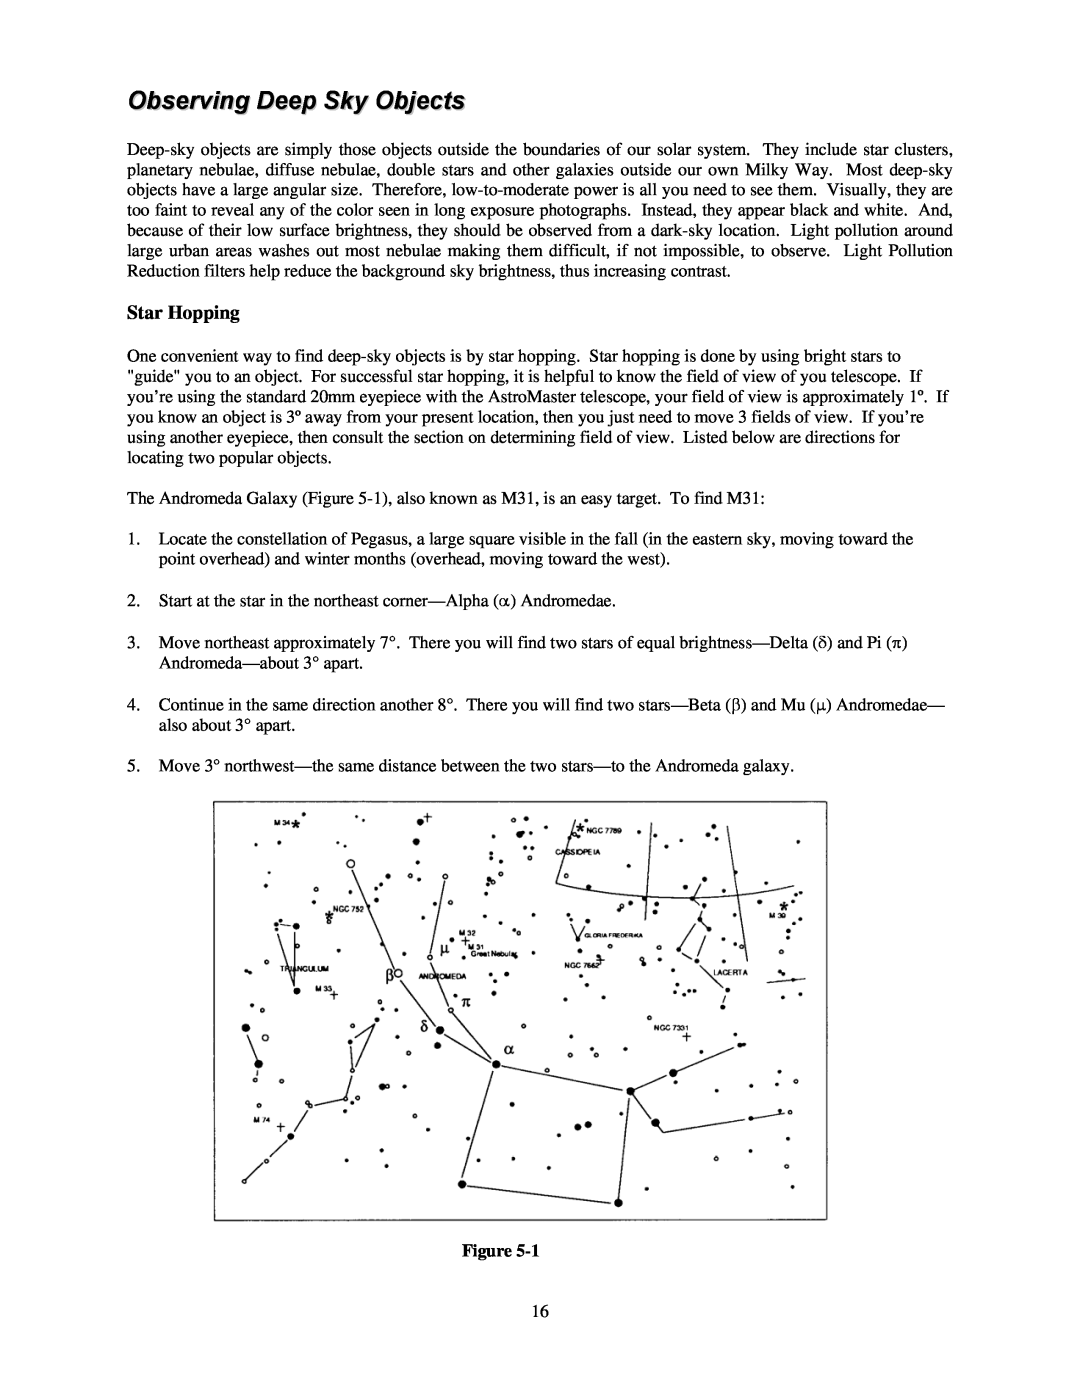 Celestron C21061 manual Observing Deep Sky Objects, Star Hopping 